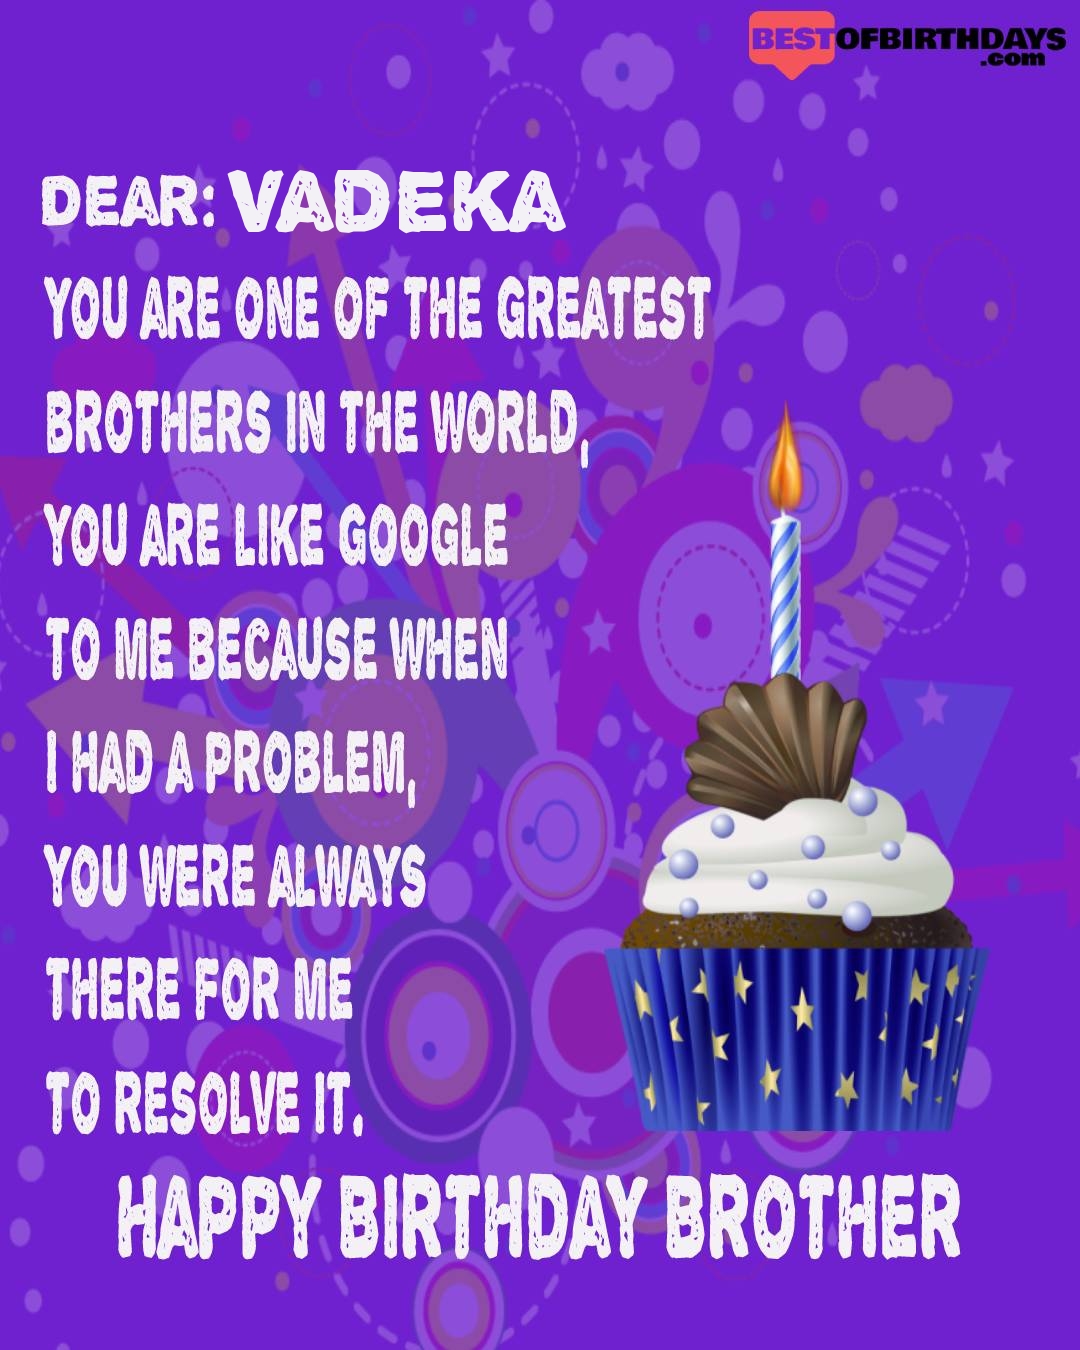 Happy birthday vadeka bhai brother bro